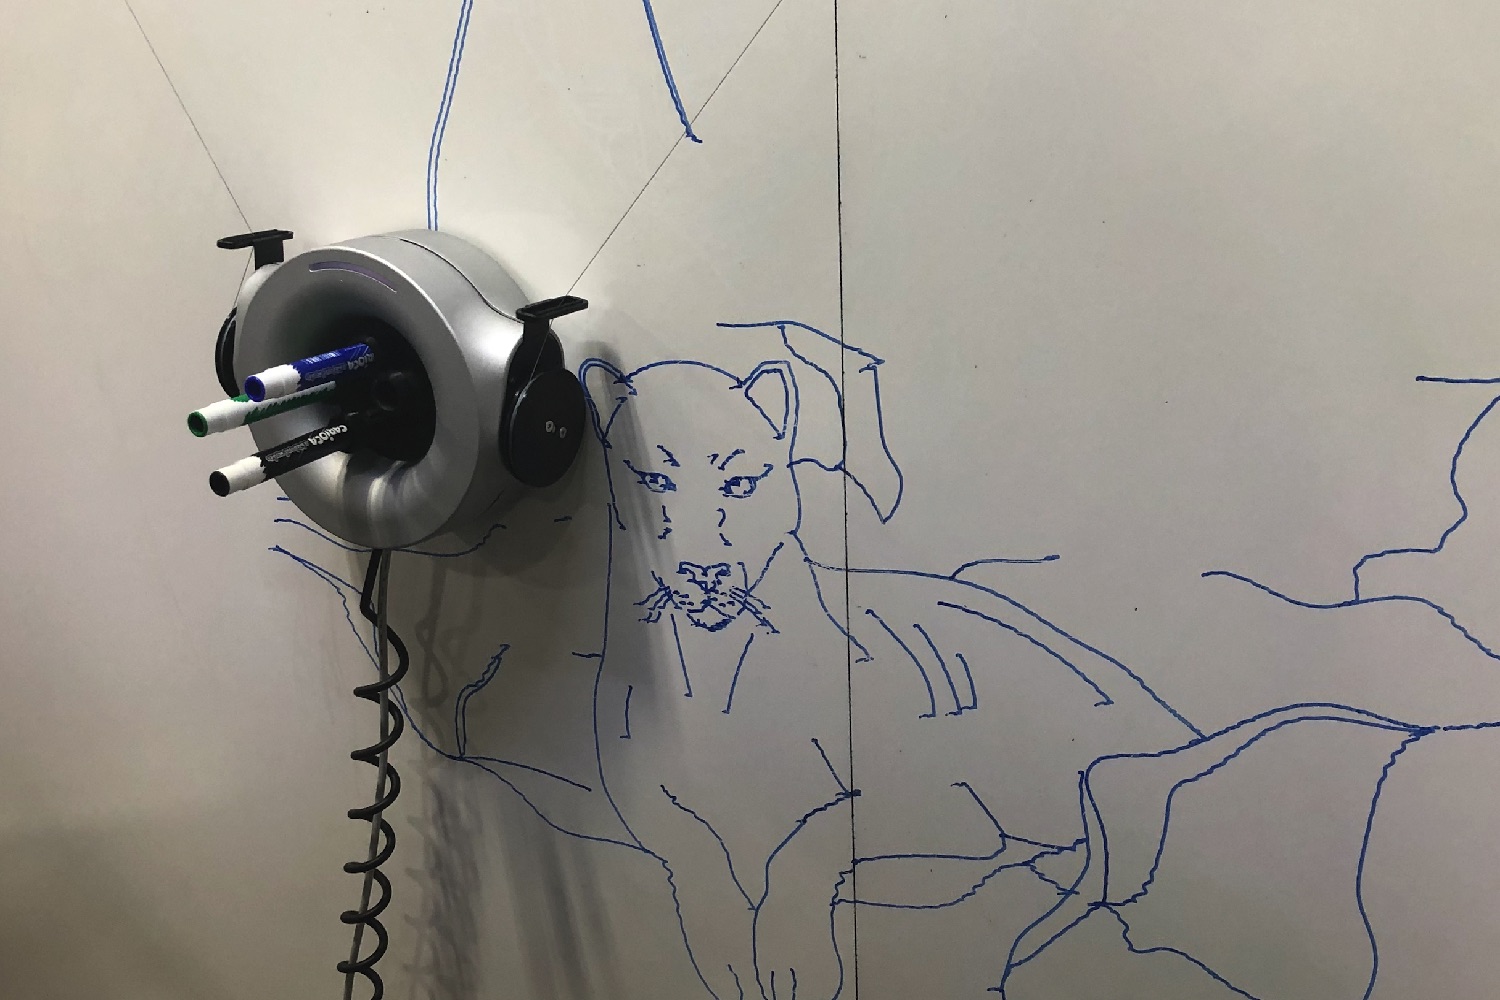 scribit wall drawing robot ces 2019 floor photo 1